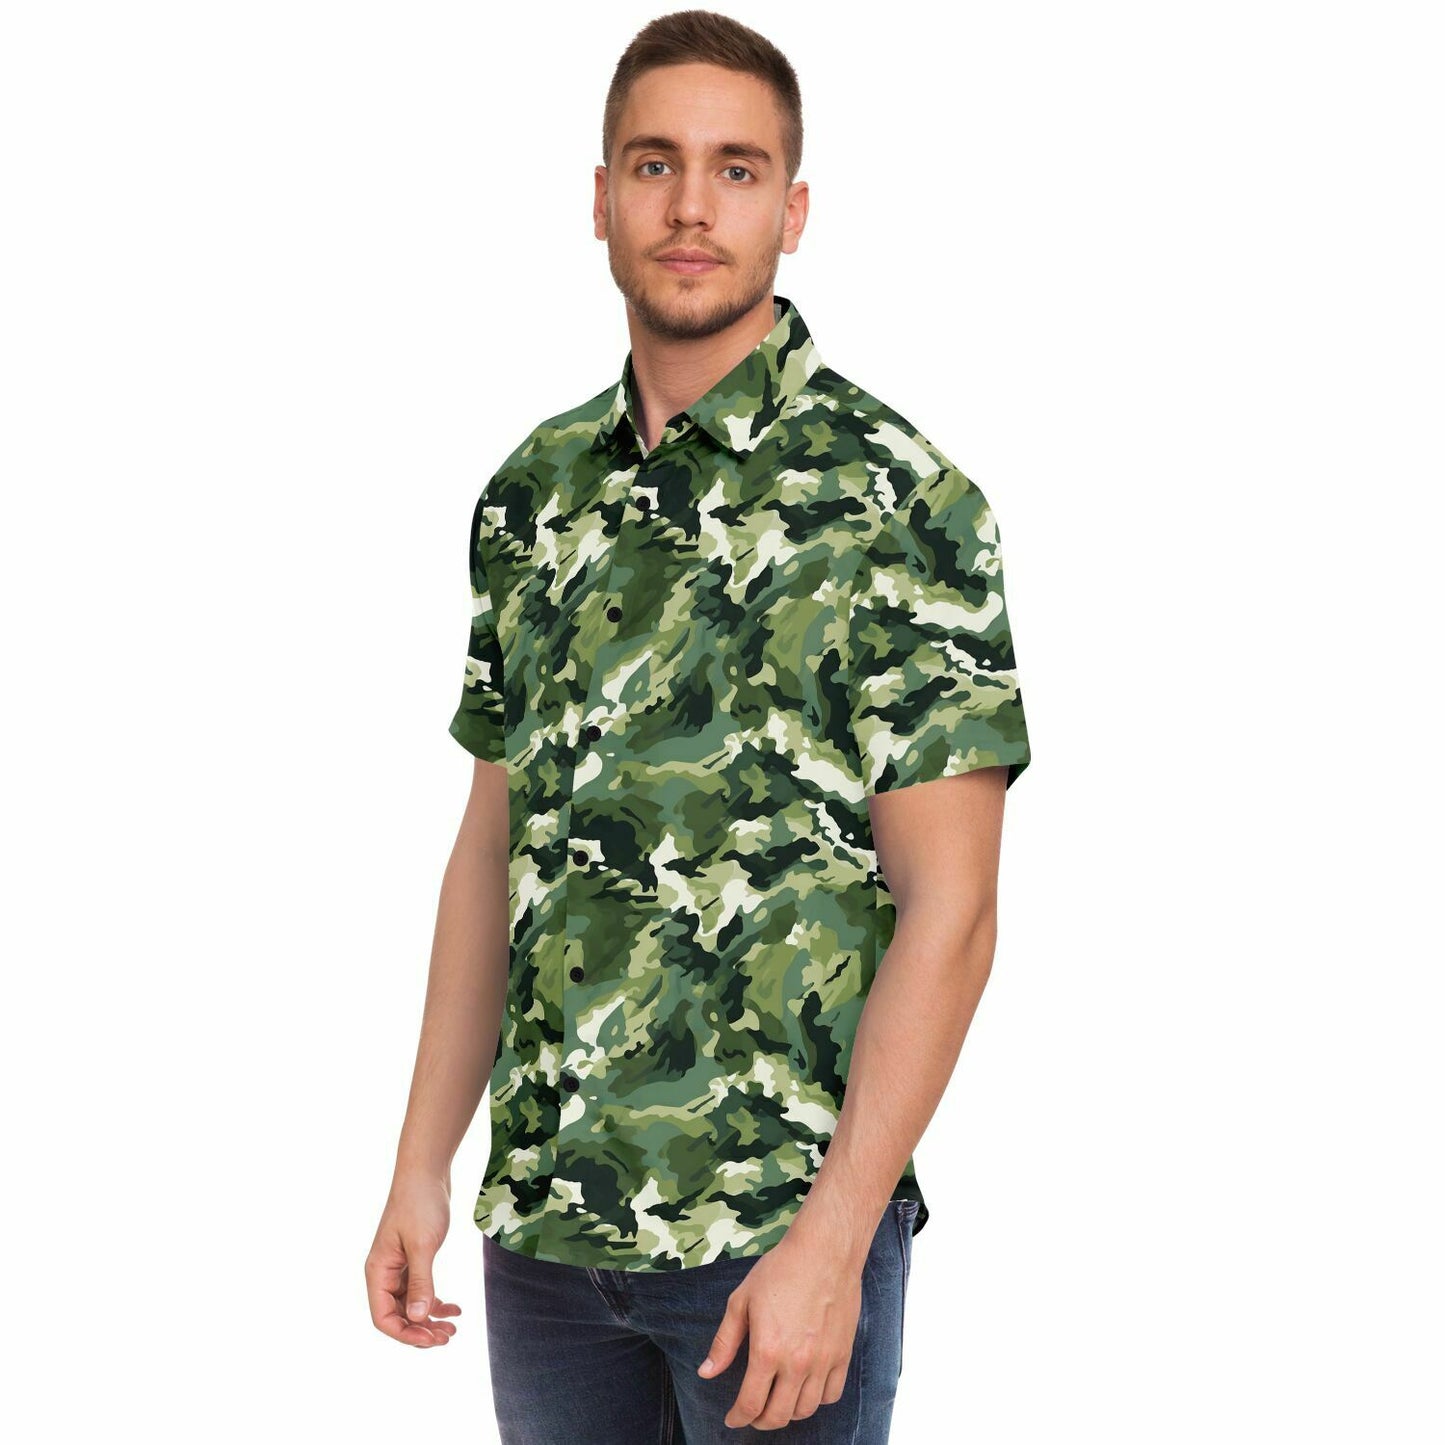 Green Short Sleeve Men Button Up Shirt, Brush Strokes Camo Camouflage Print Casual Buttoned Down Summer Collared Dress Shirt